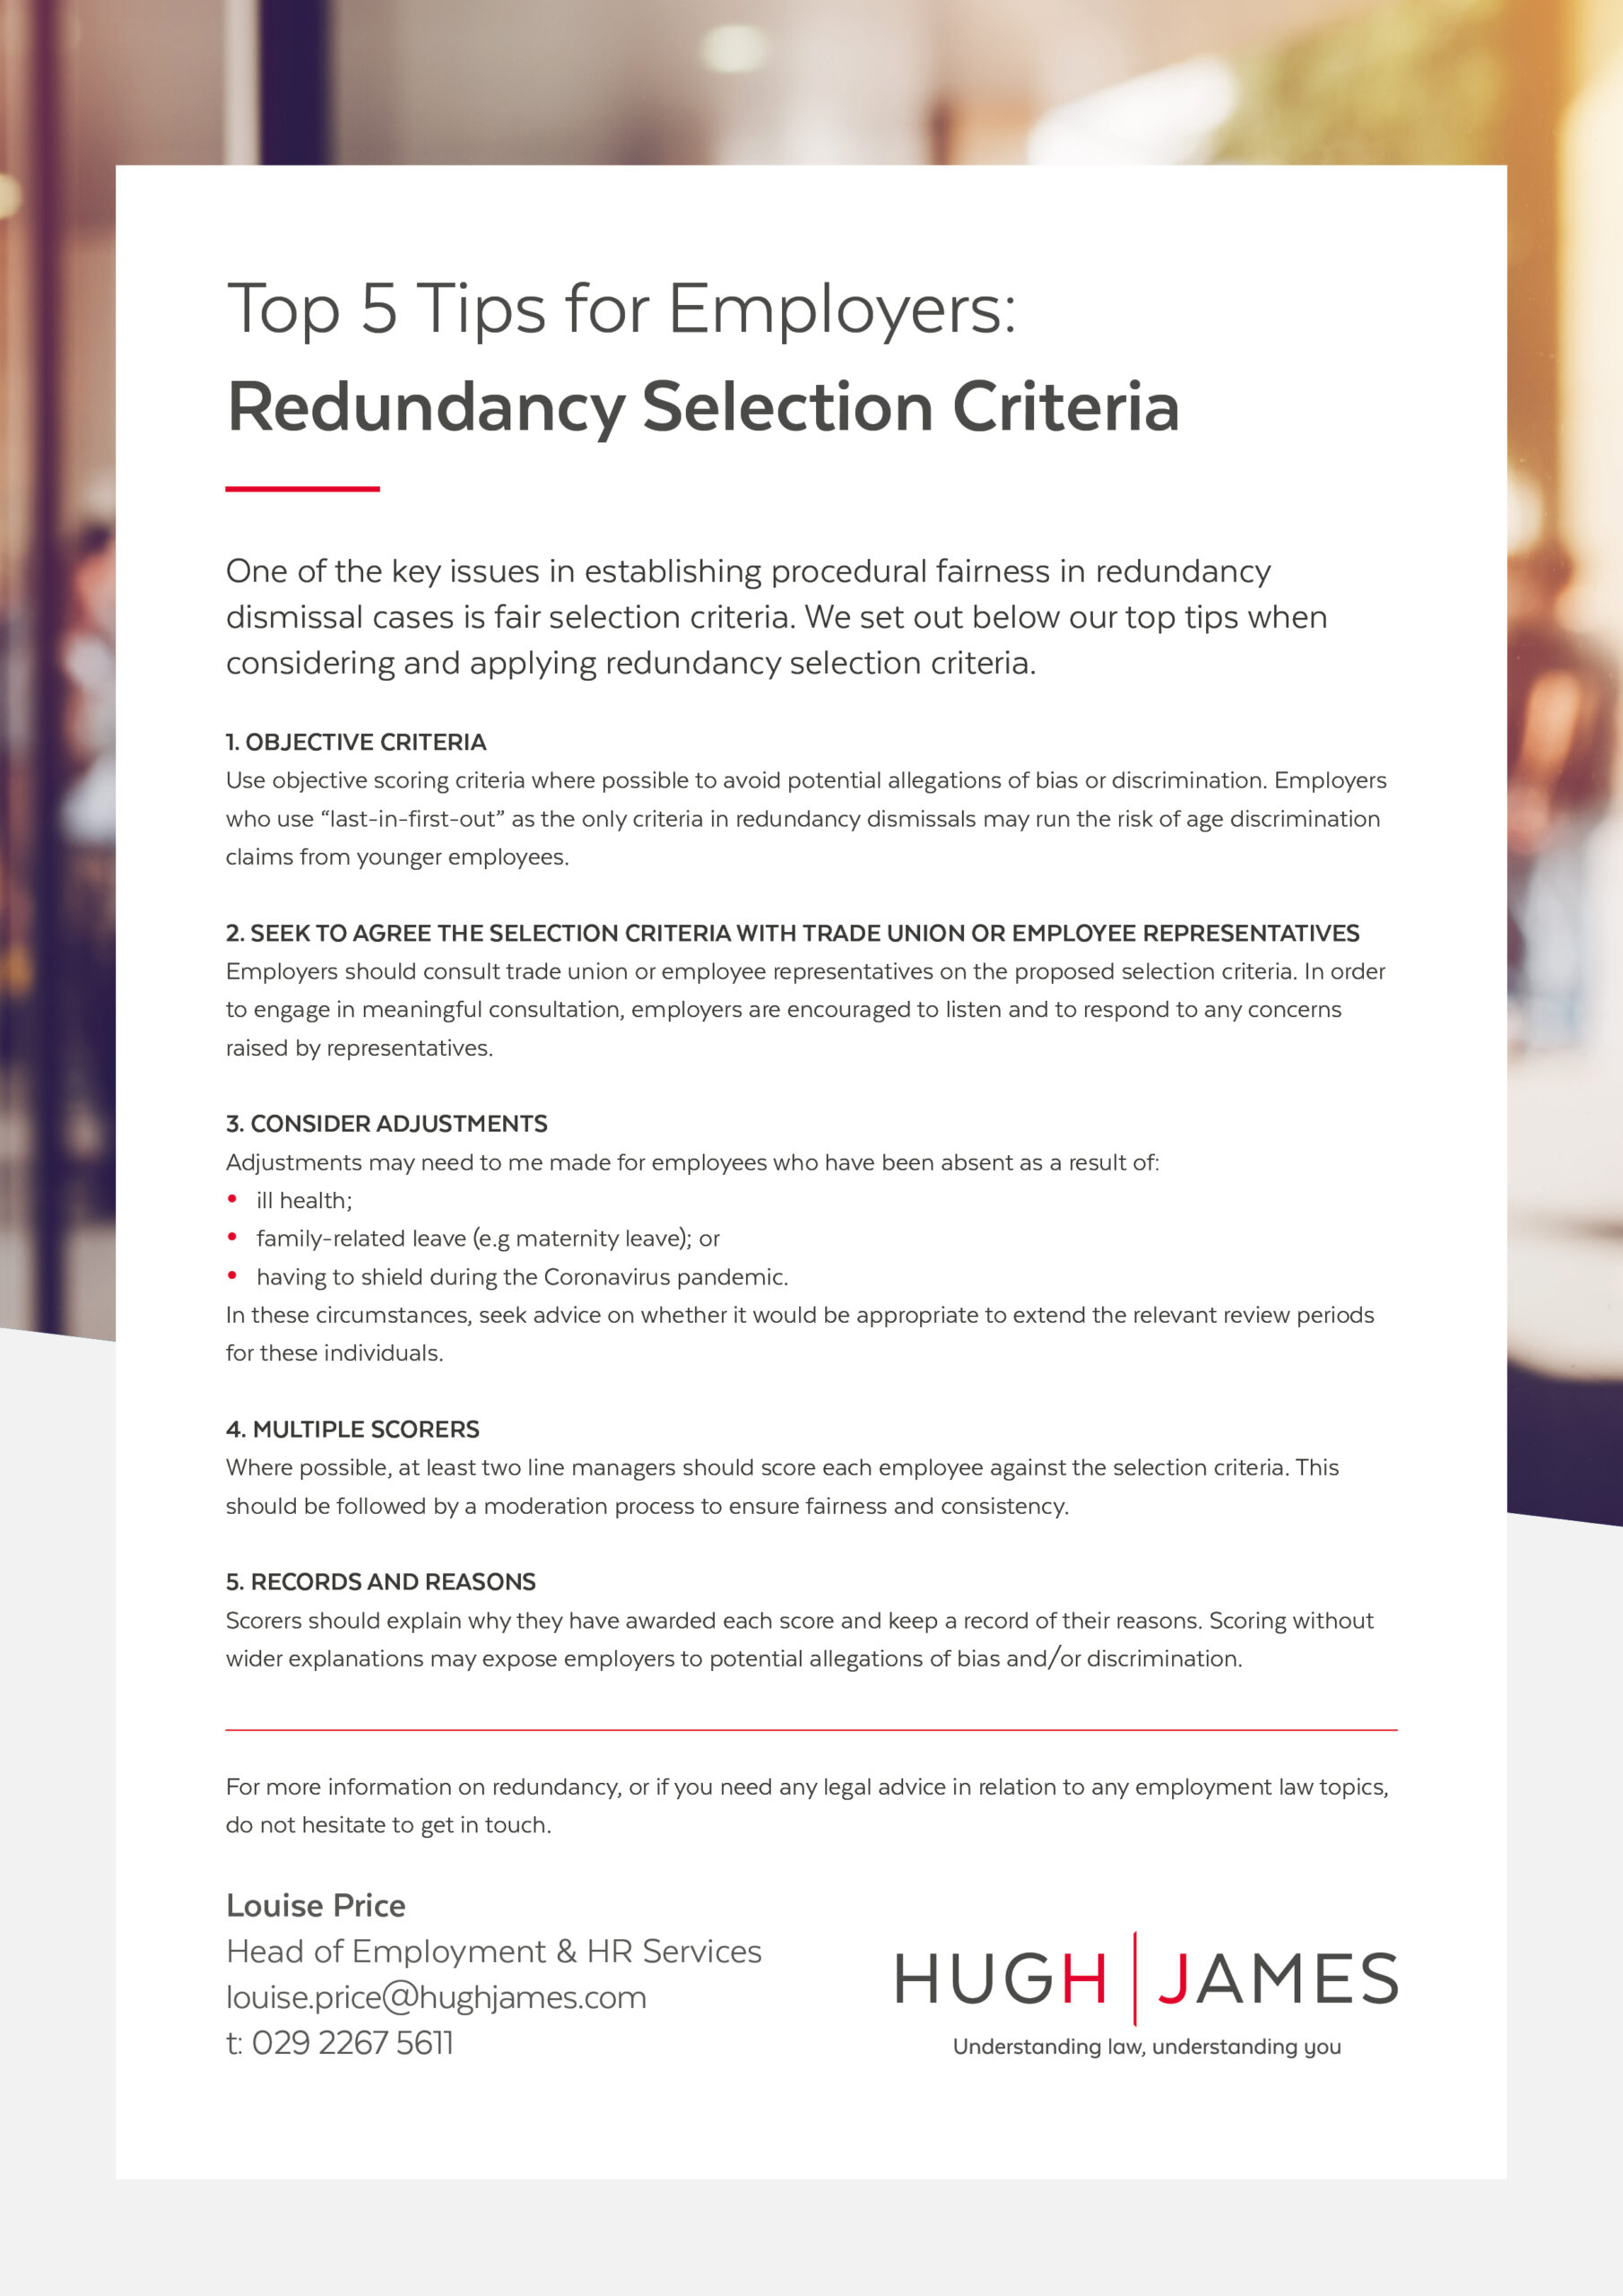 Top 5 tips for employers: redundancy selection criteria | Hugh James